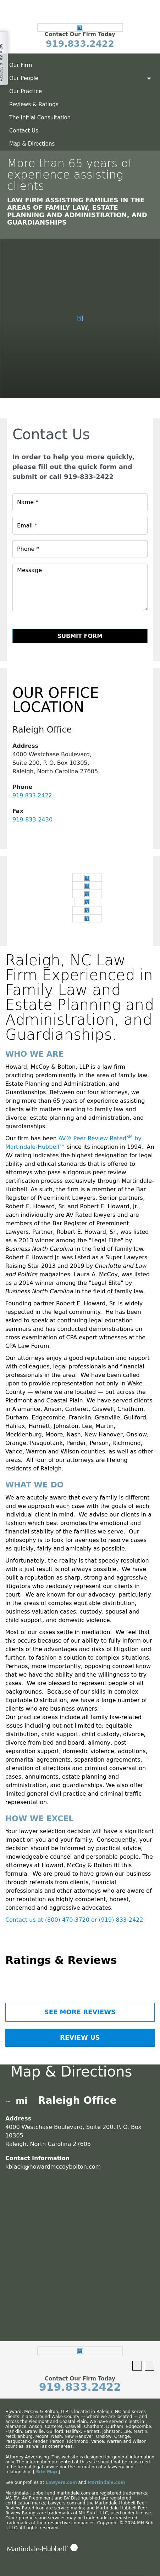 Howard Green & Moye LLP - Raleigh NC Lawyers